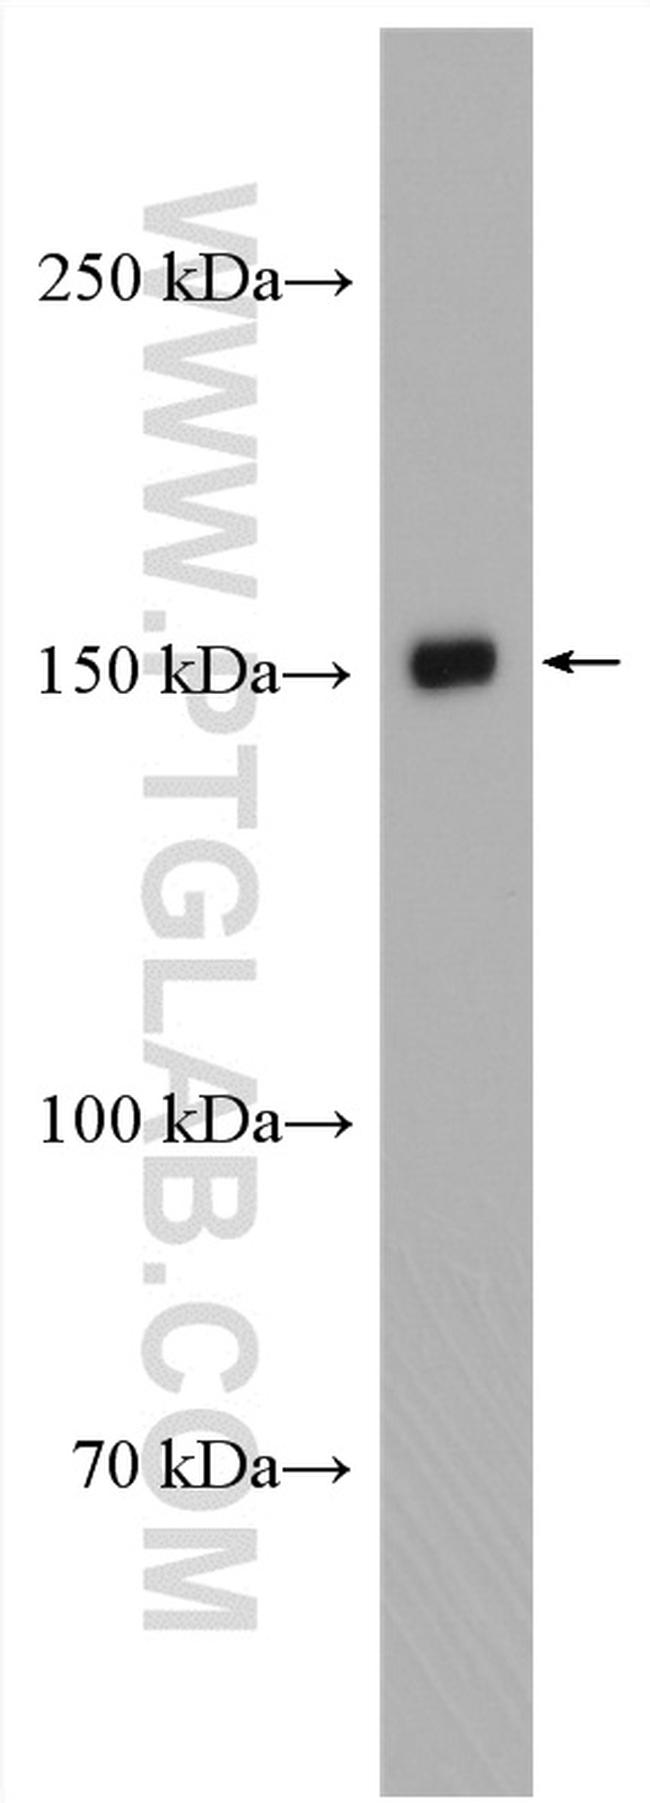 KIAA1199 Antibody in Western Blot (WB)